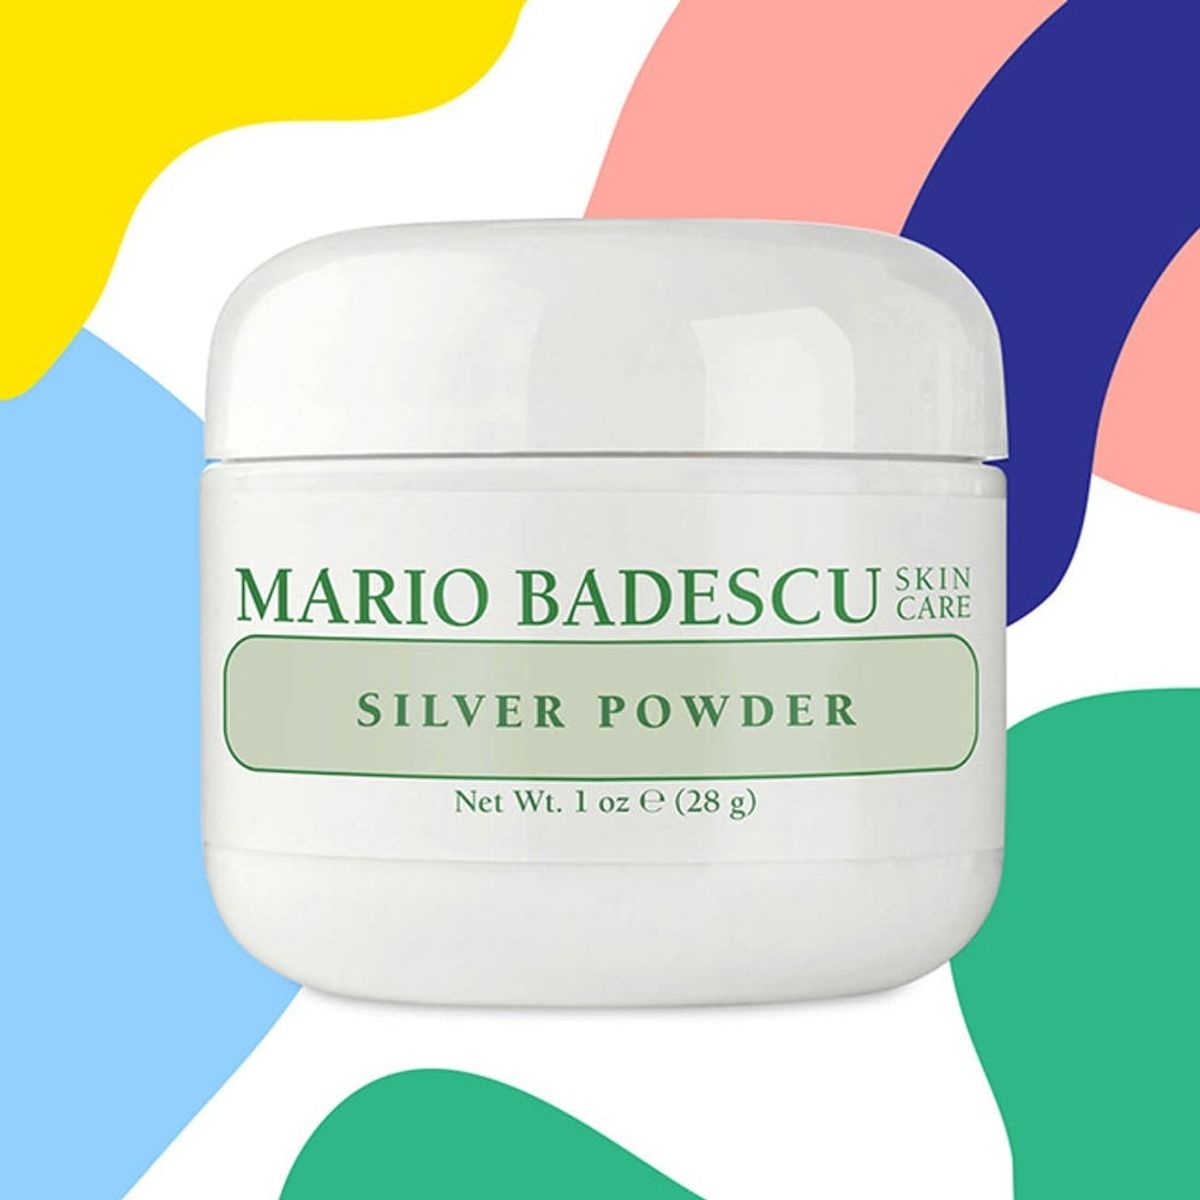 This Weird Silver Powder Works Wonders on Pores